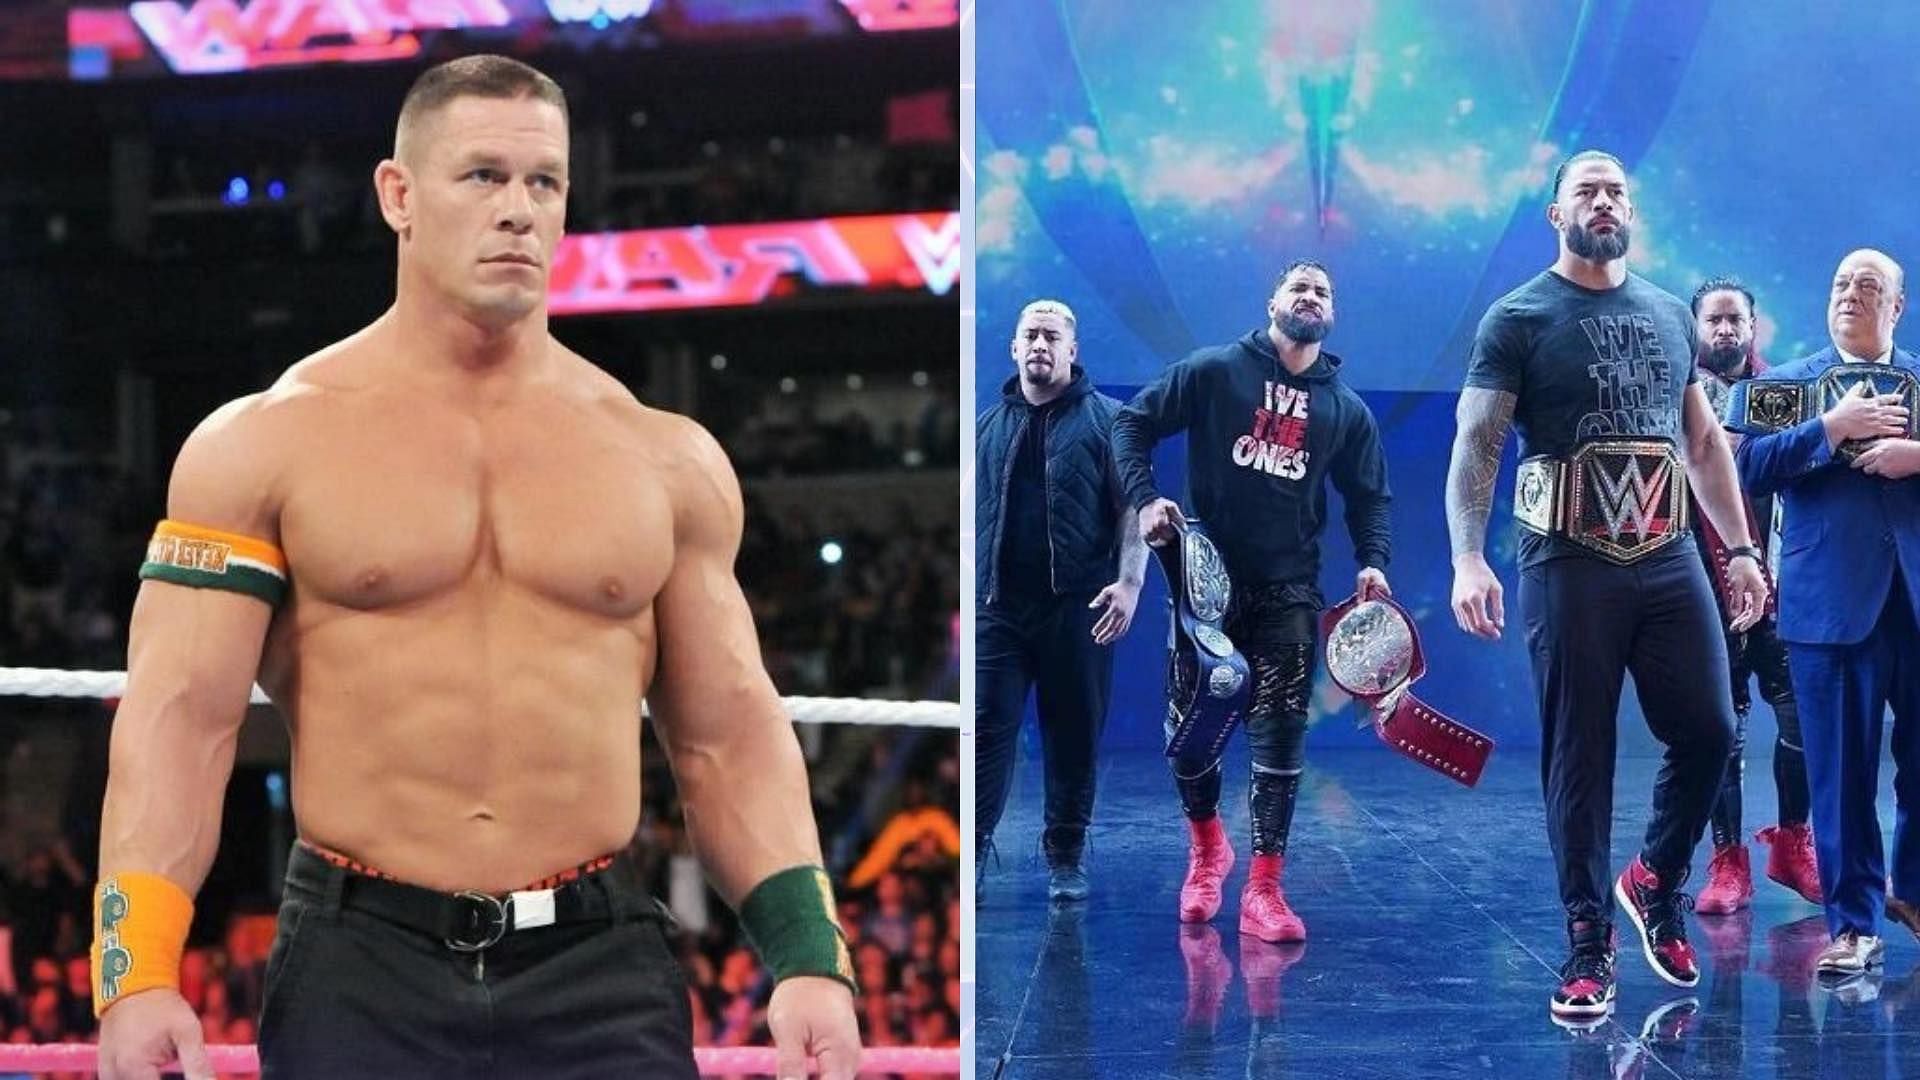 John Cena and the Bloodline